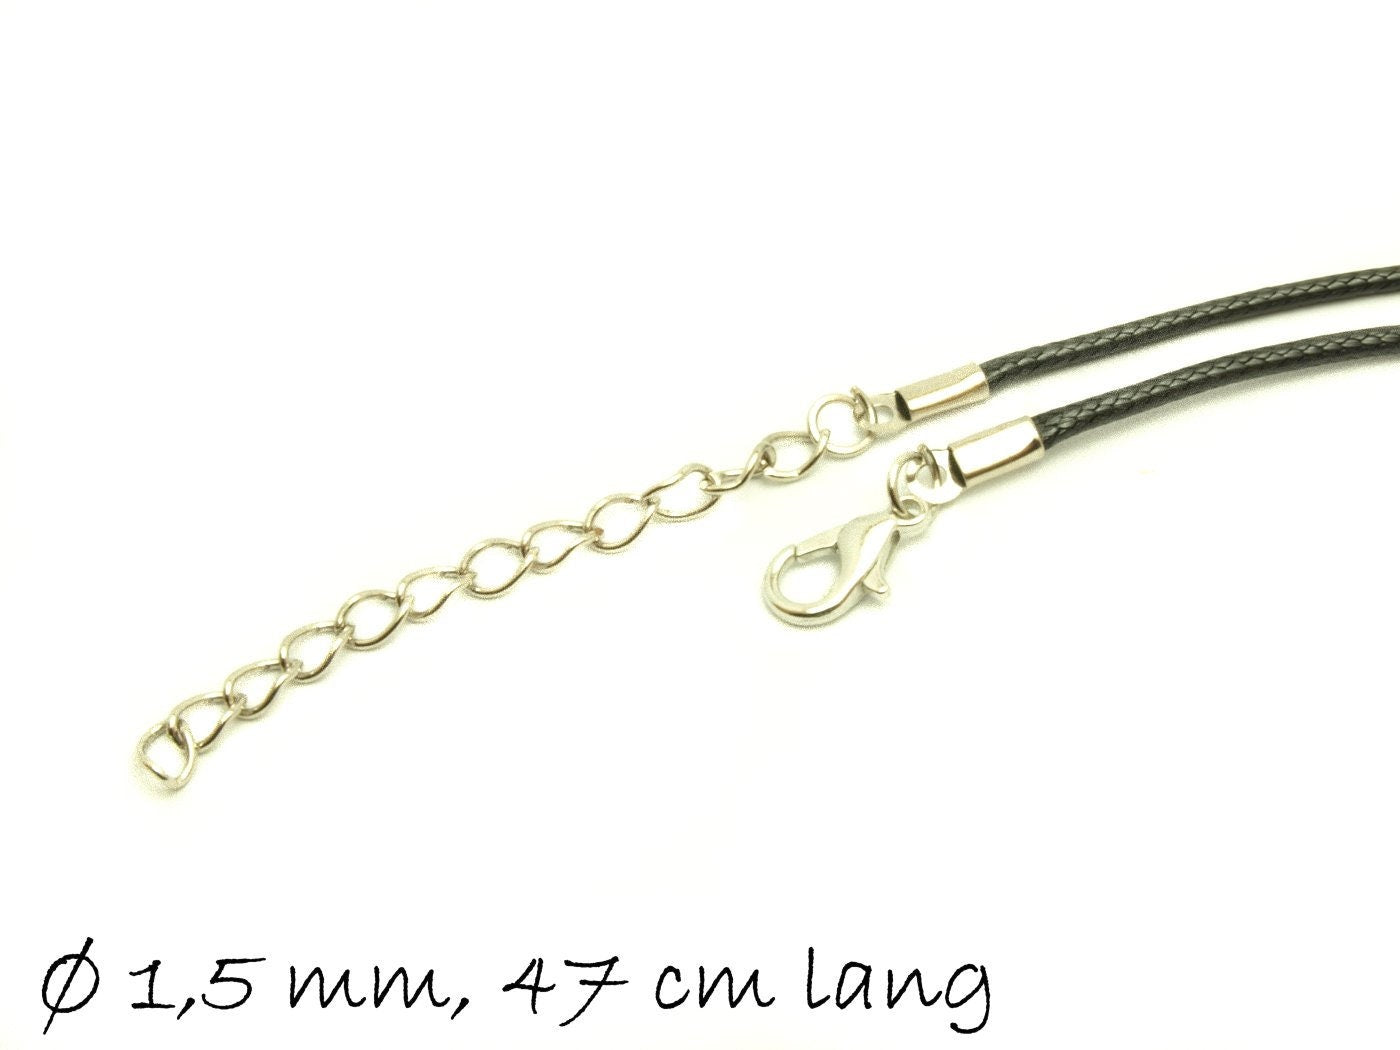 1 Stück Wachsbandkette, 47 cm lang, Ø 1,5 mm, schwarz